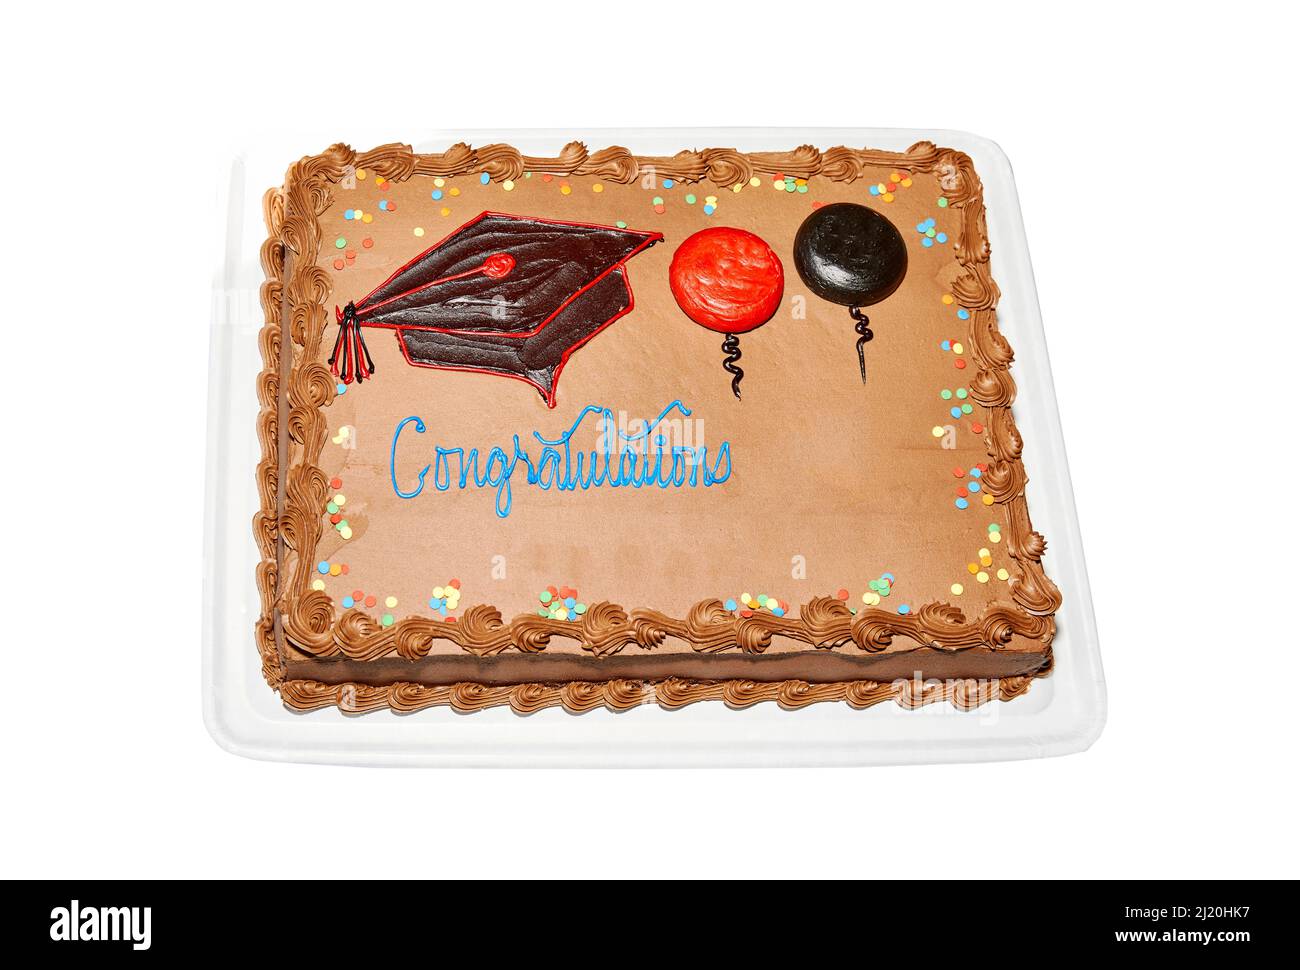 Graduation cake Imágenes recortadas de stock - Alamy